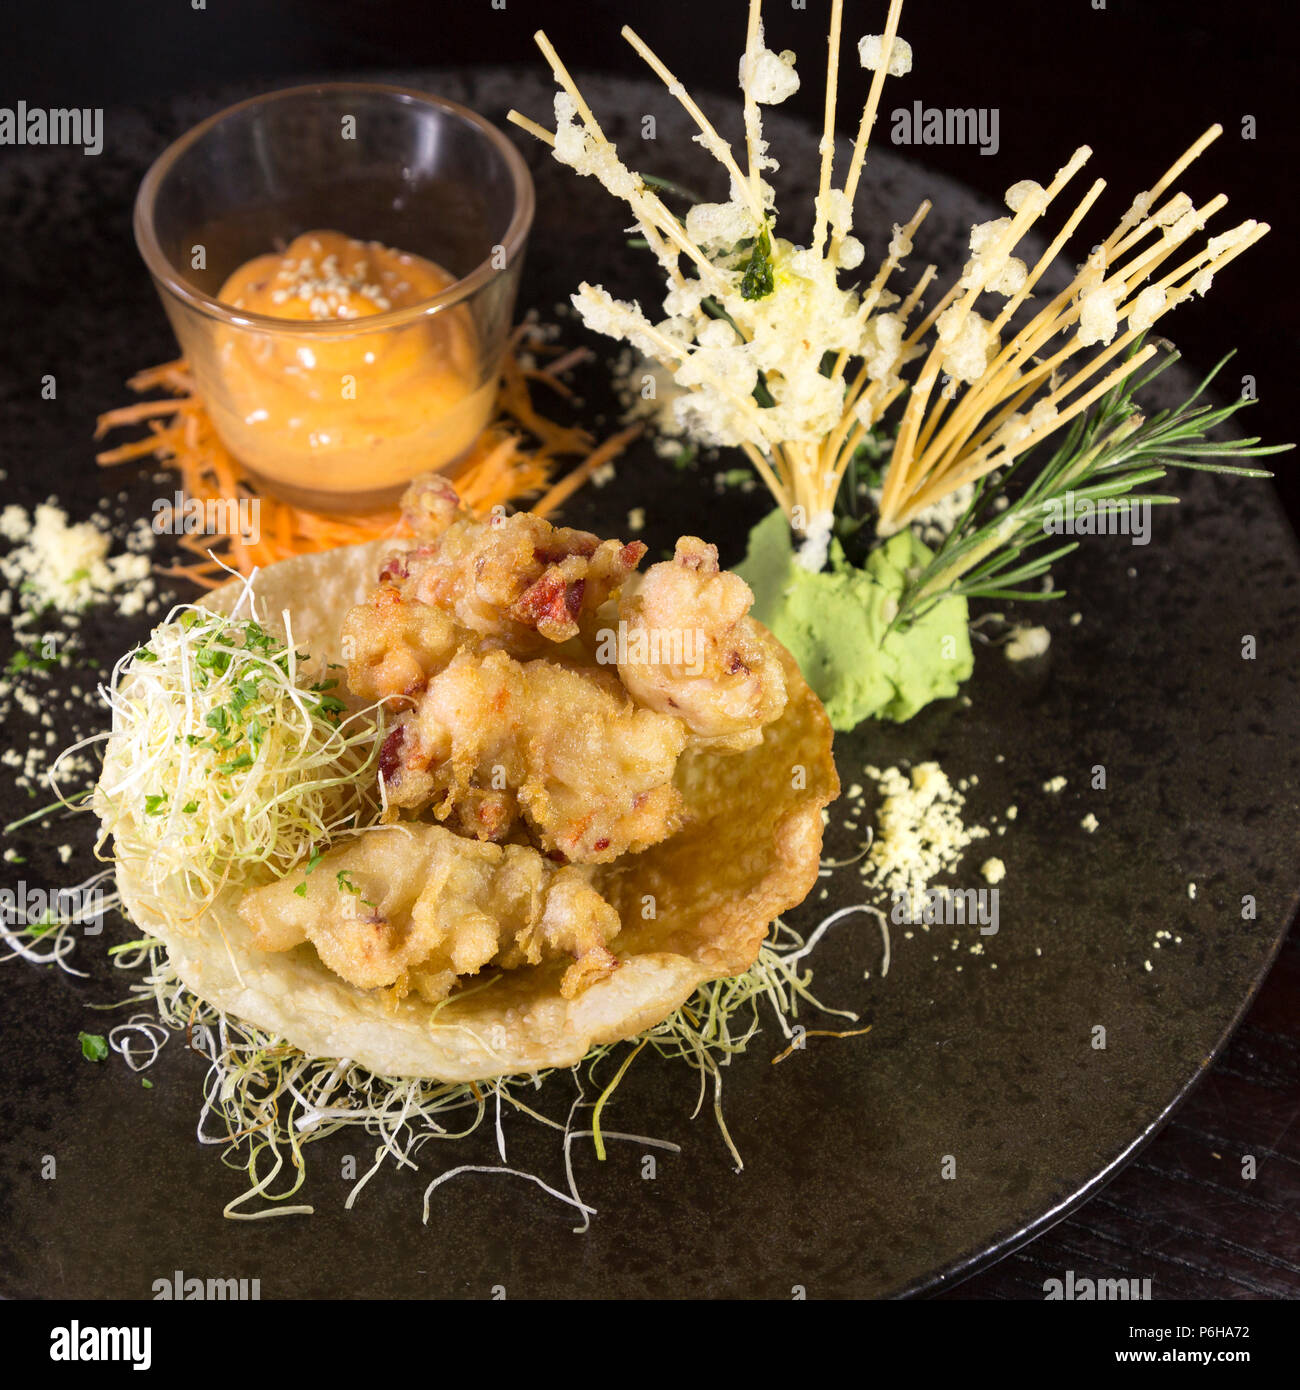 Lobster tempura with Sriracha mayo. The deep fried dish has Asian influences. Stock Photo